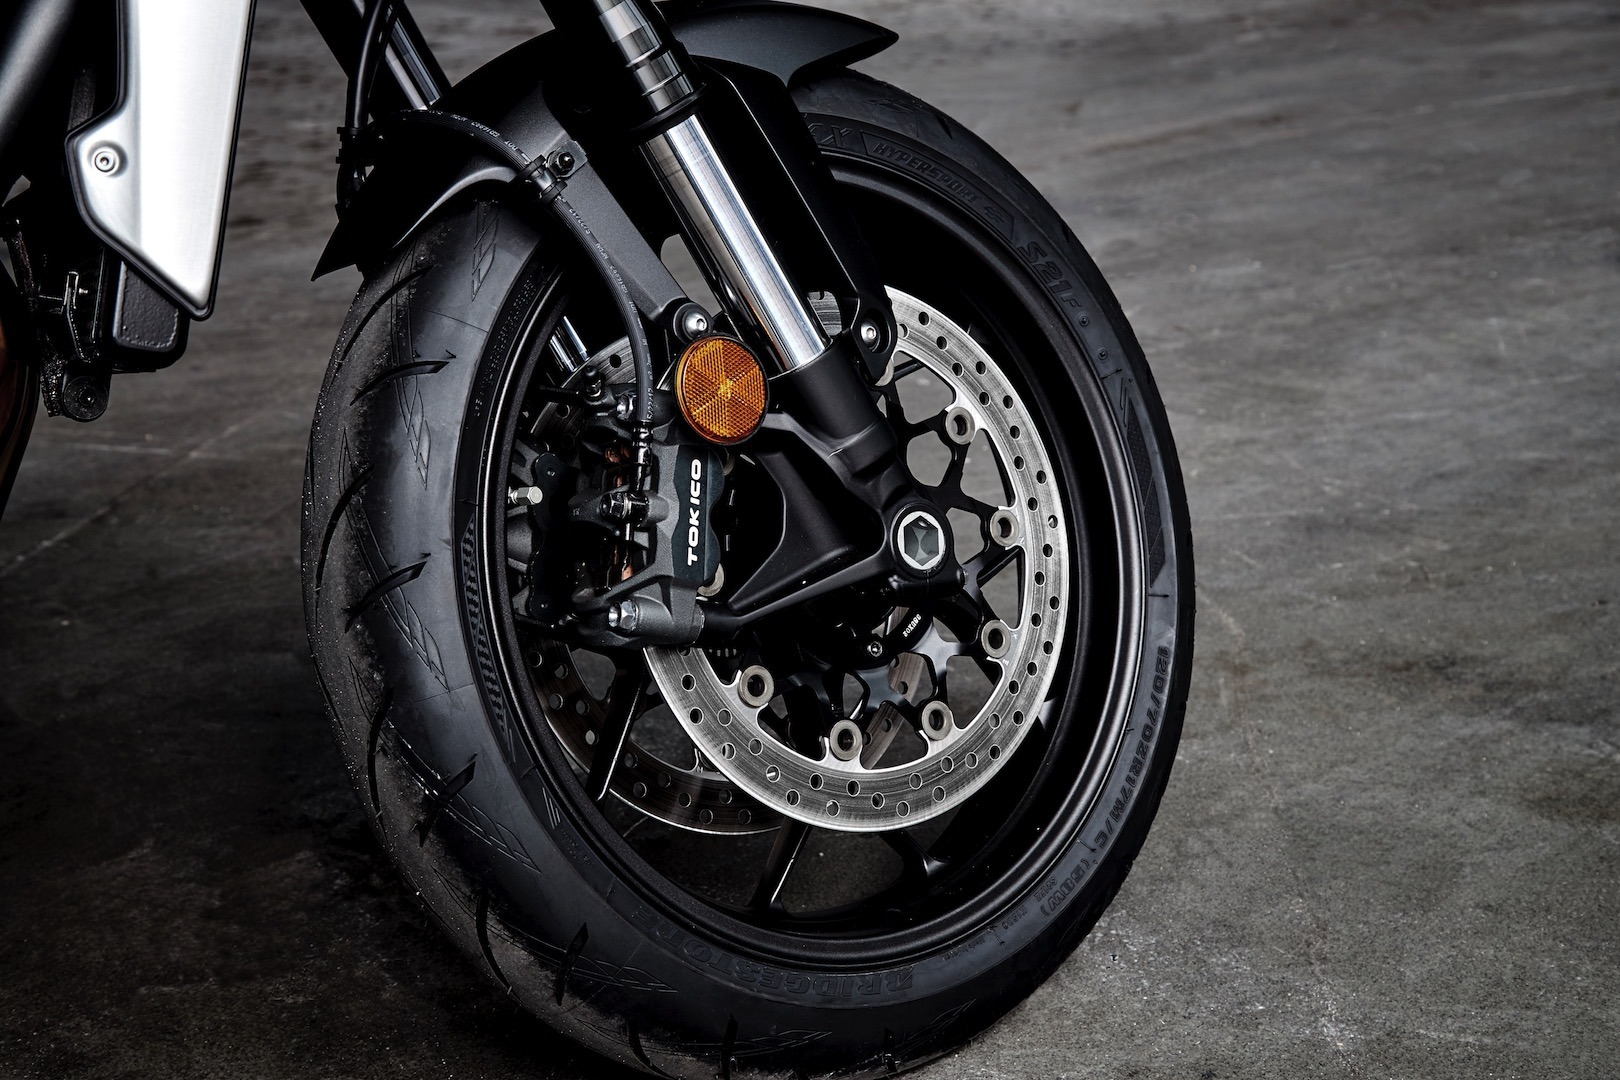 2018-Honda-CB1000R-First-Look-naked-sport-motorcycle-2.jpg